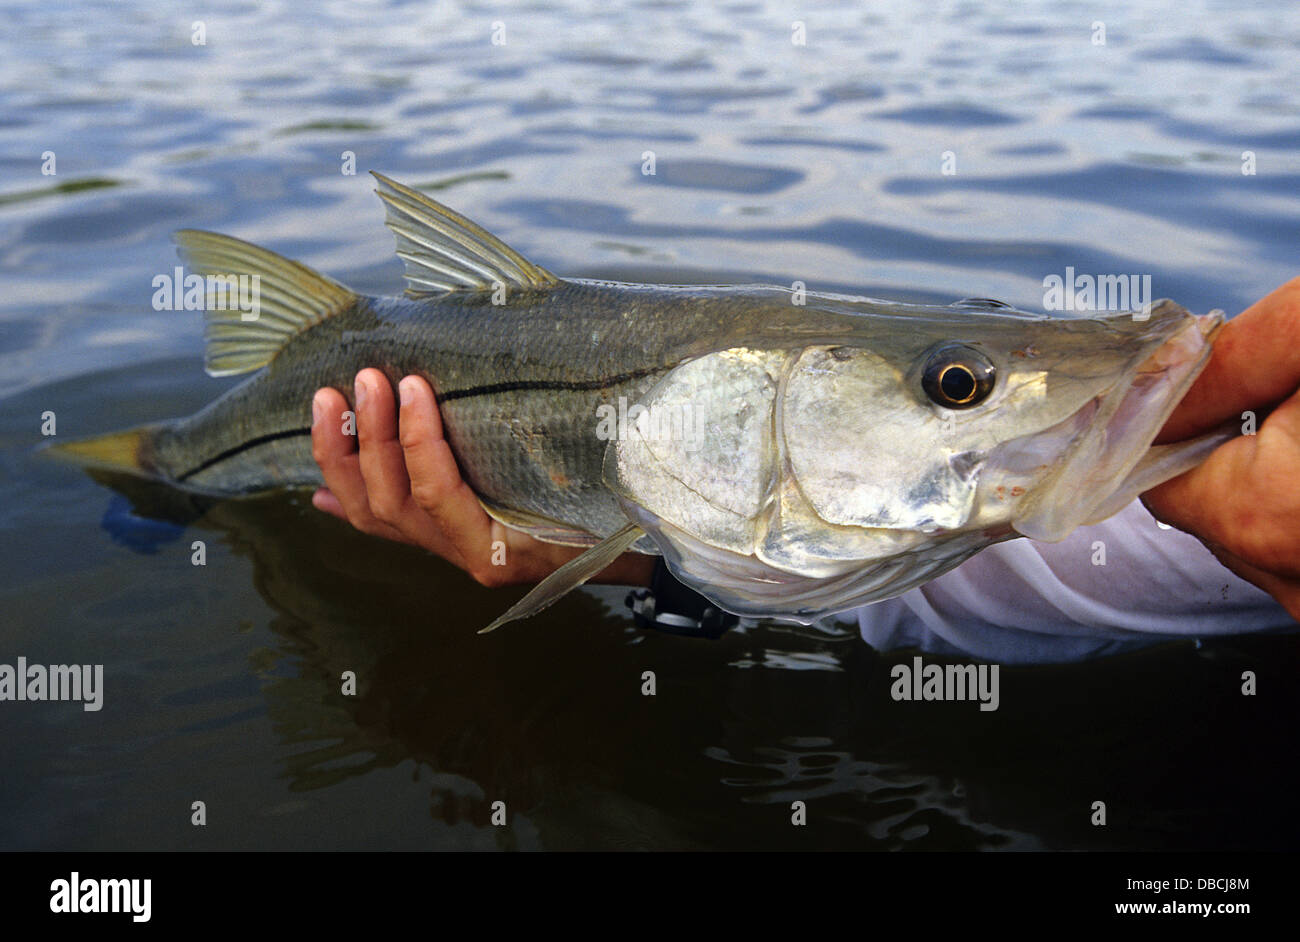 A snook (Centropomus undecimalis) caught while fishing near Everglades City Florida Stock Photo